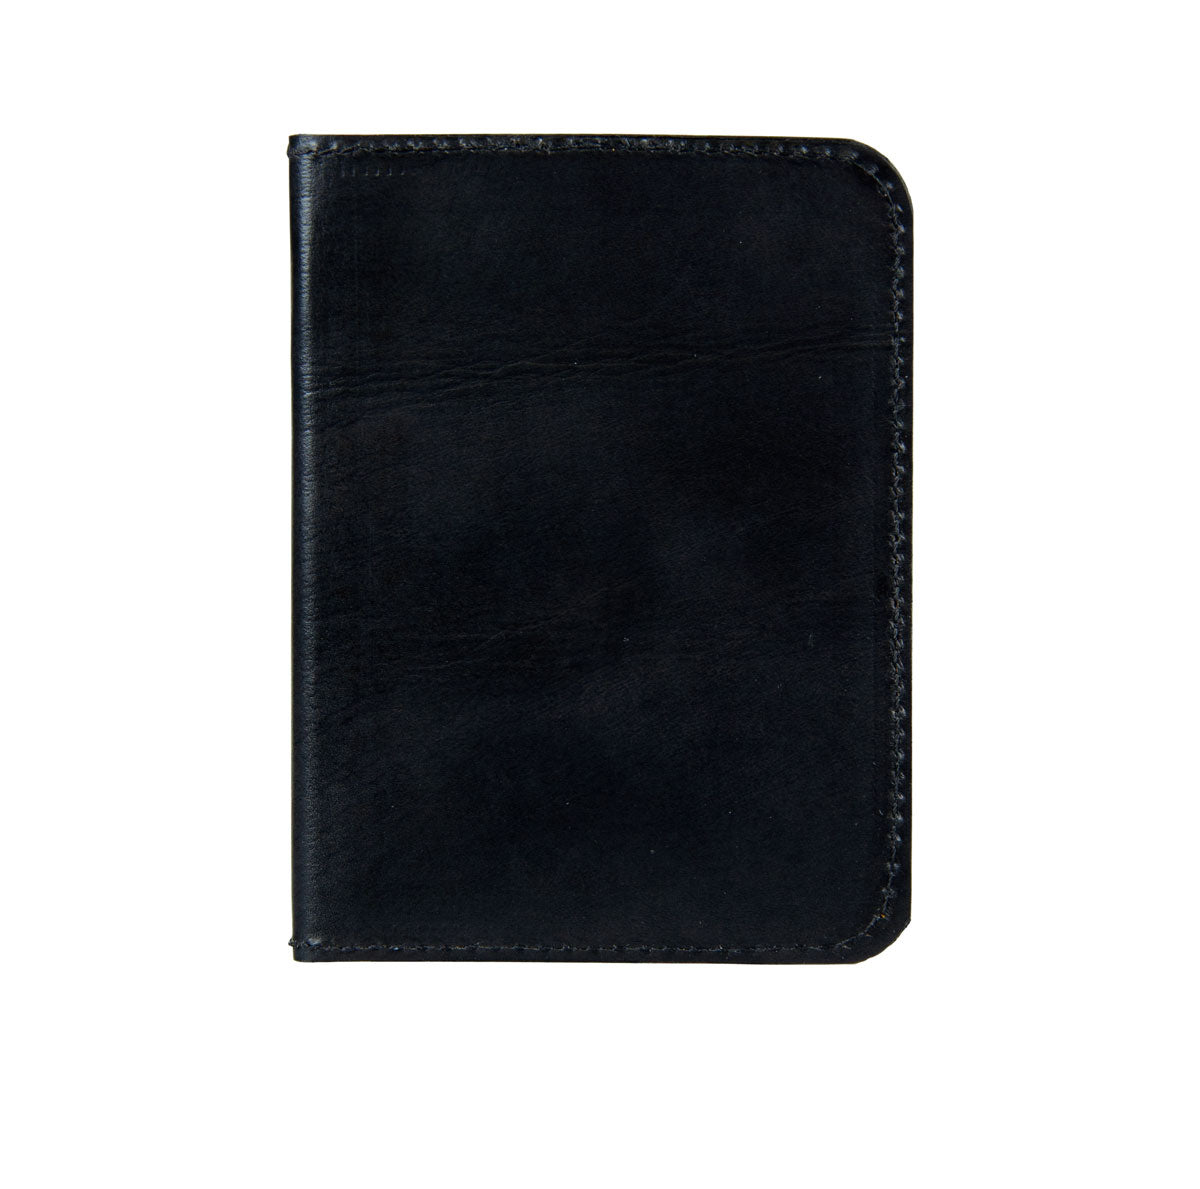 Handmade Leather Wallet - Black